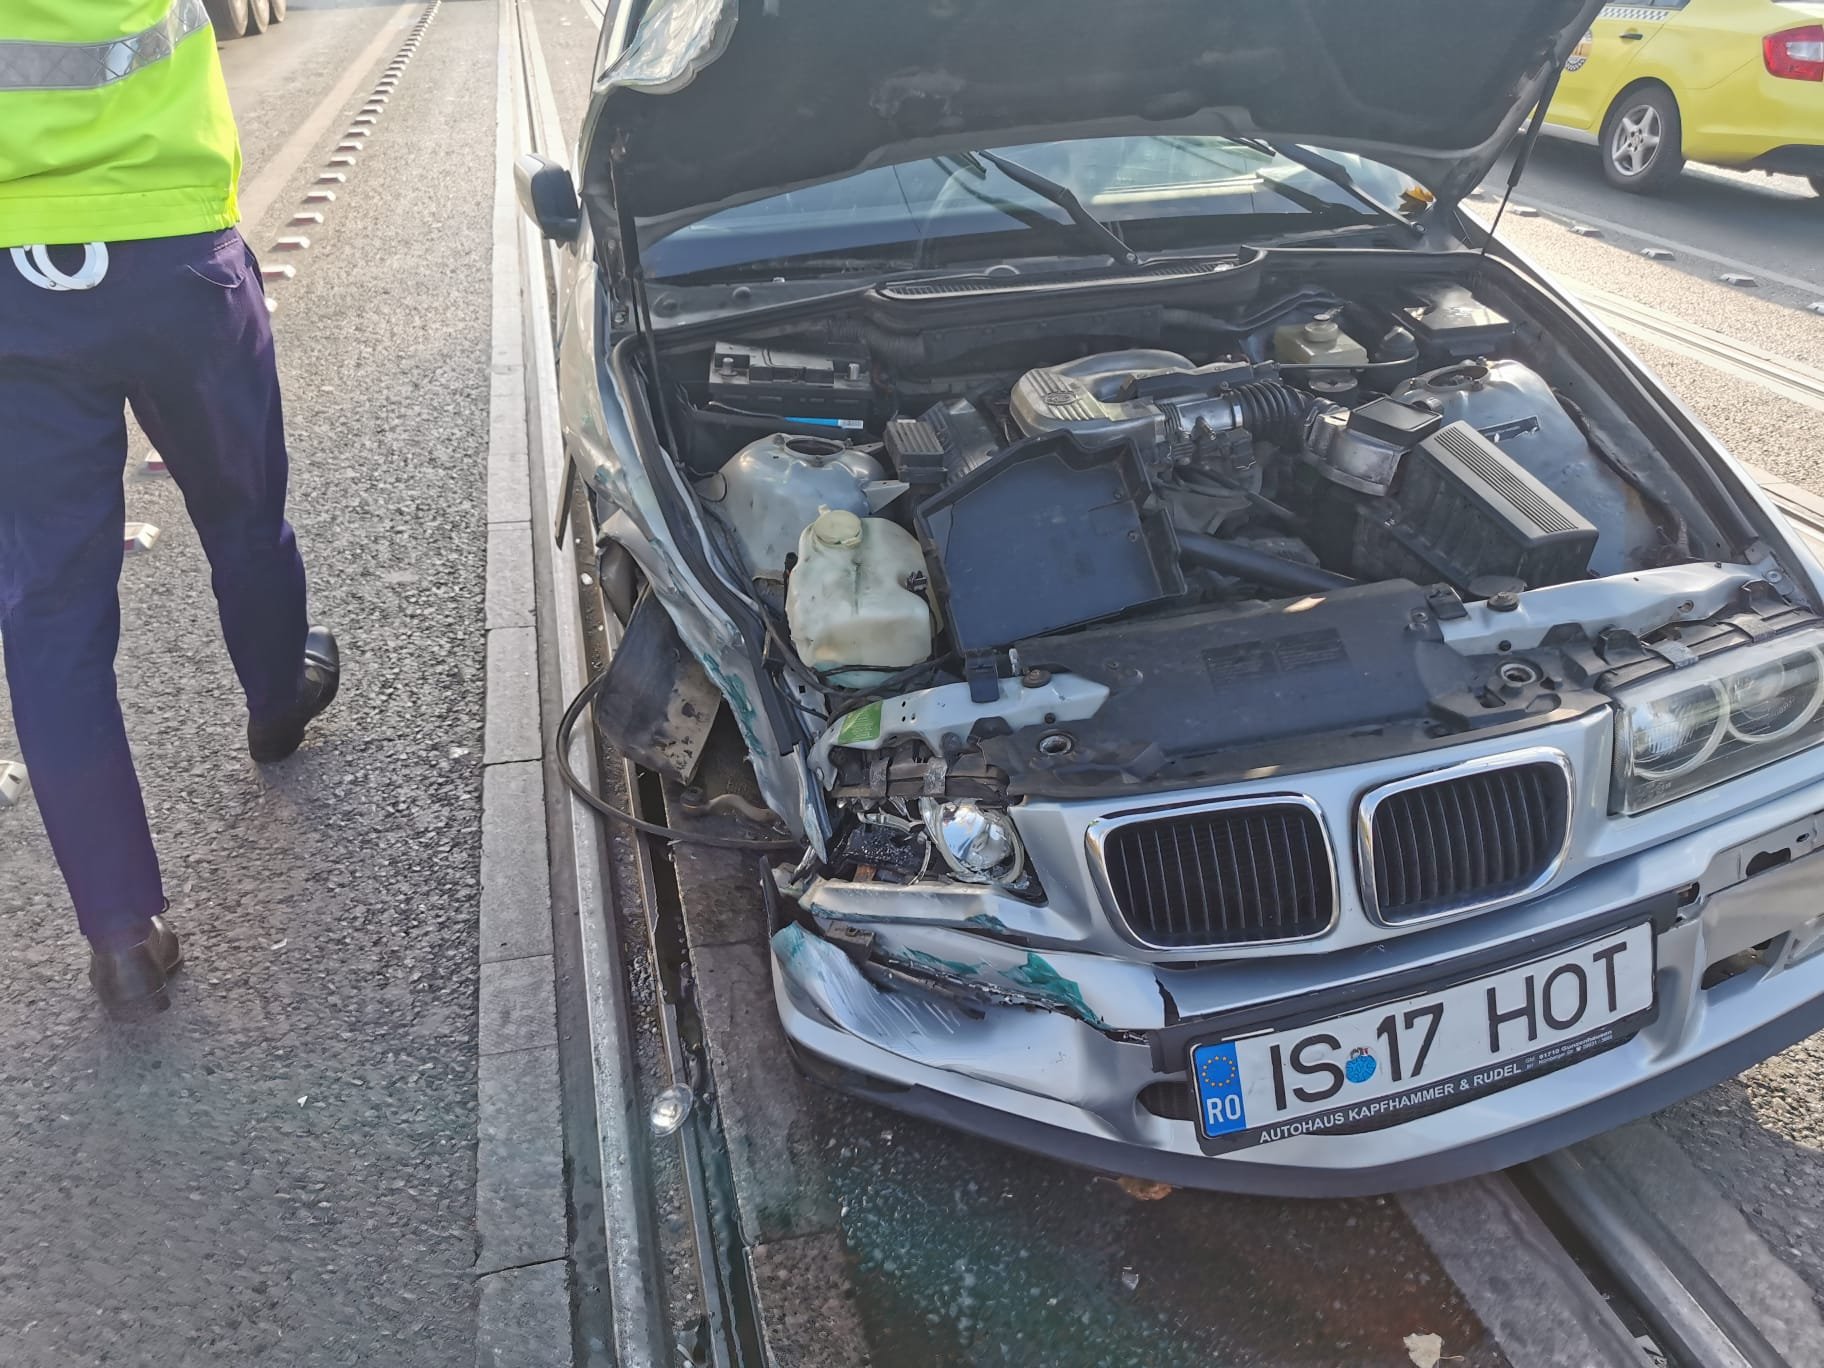  FOTO –  Accident auto pe bulevardul Tudor Vladimirescu. Un BMW a fost avariat serios